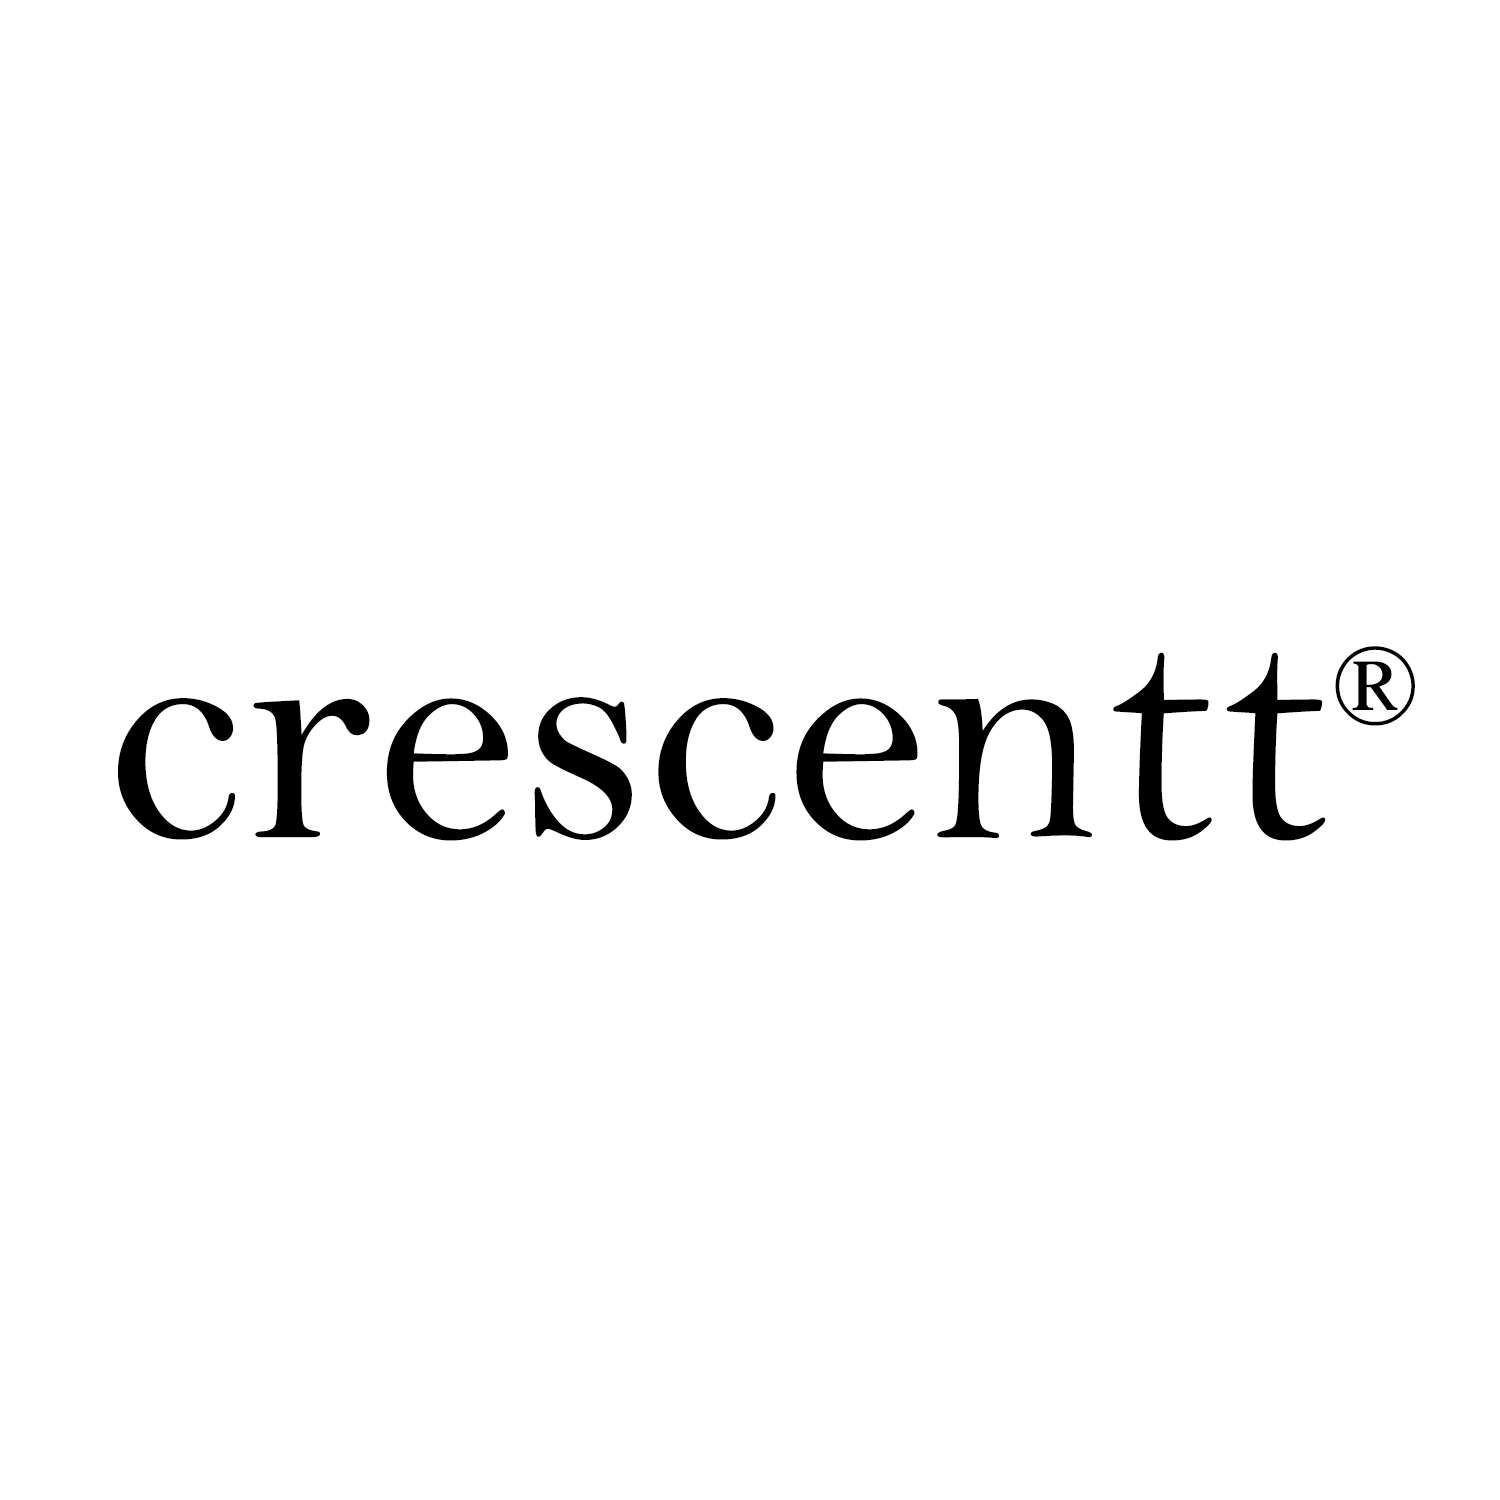 crescentt-registered-logo.png